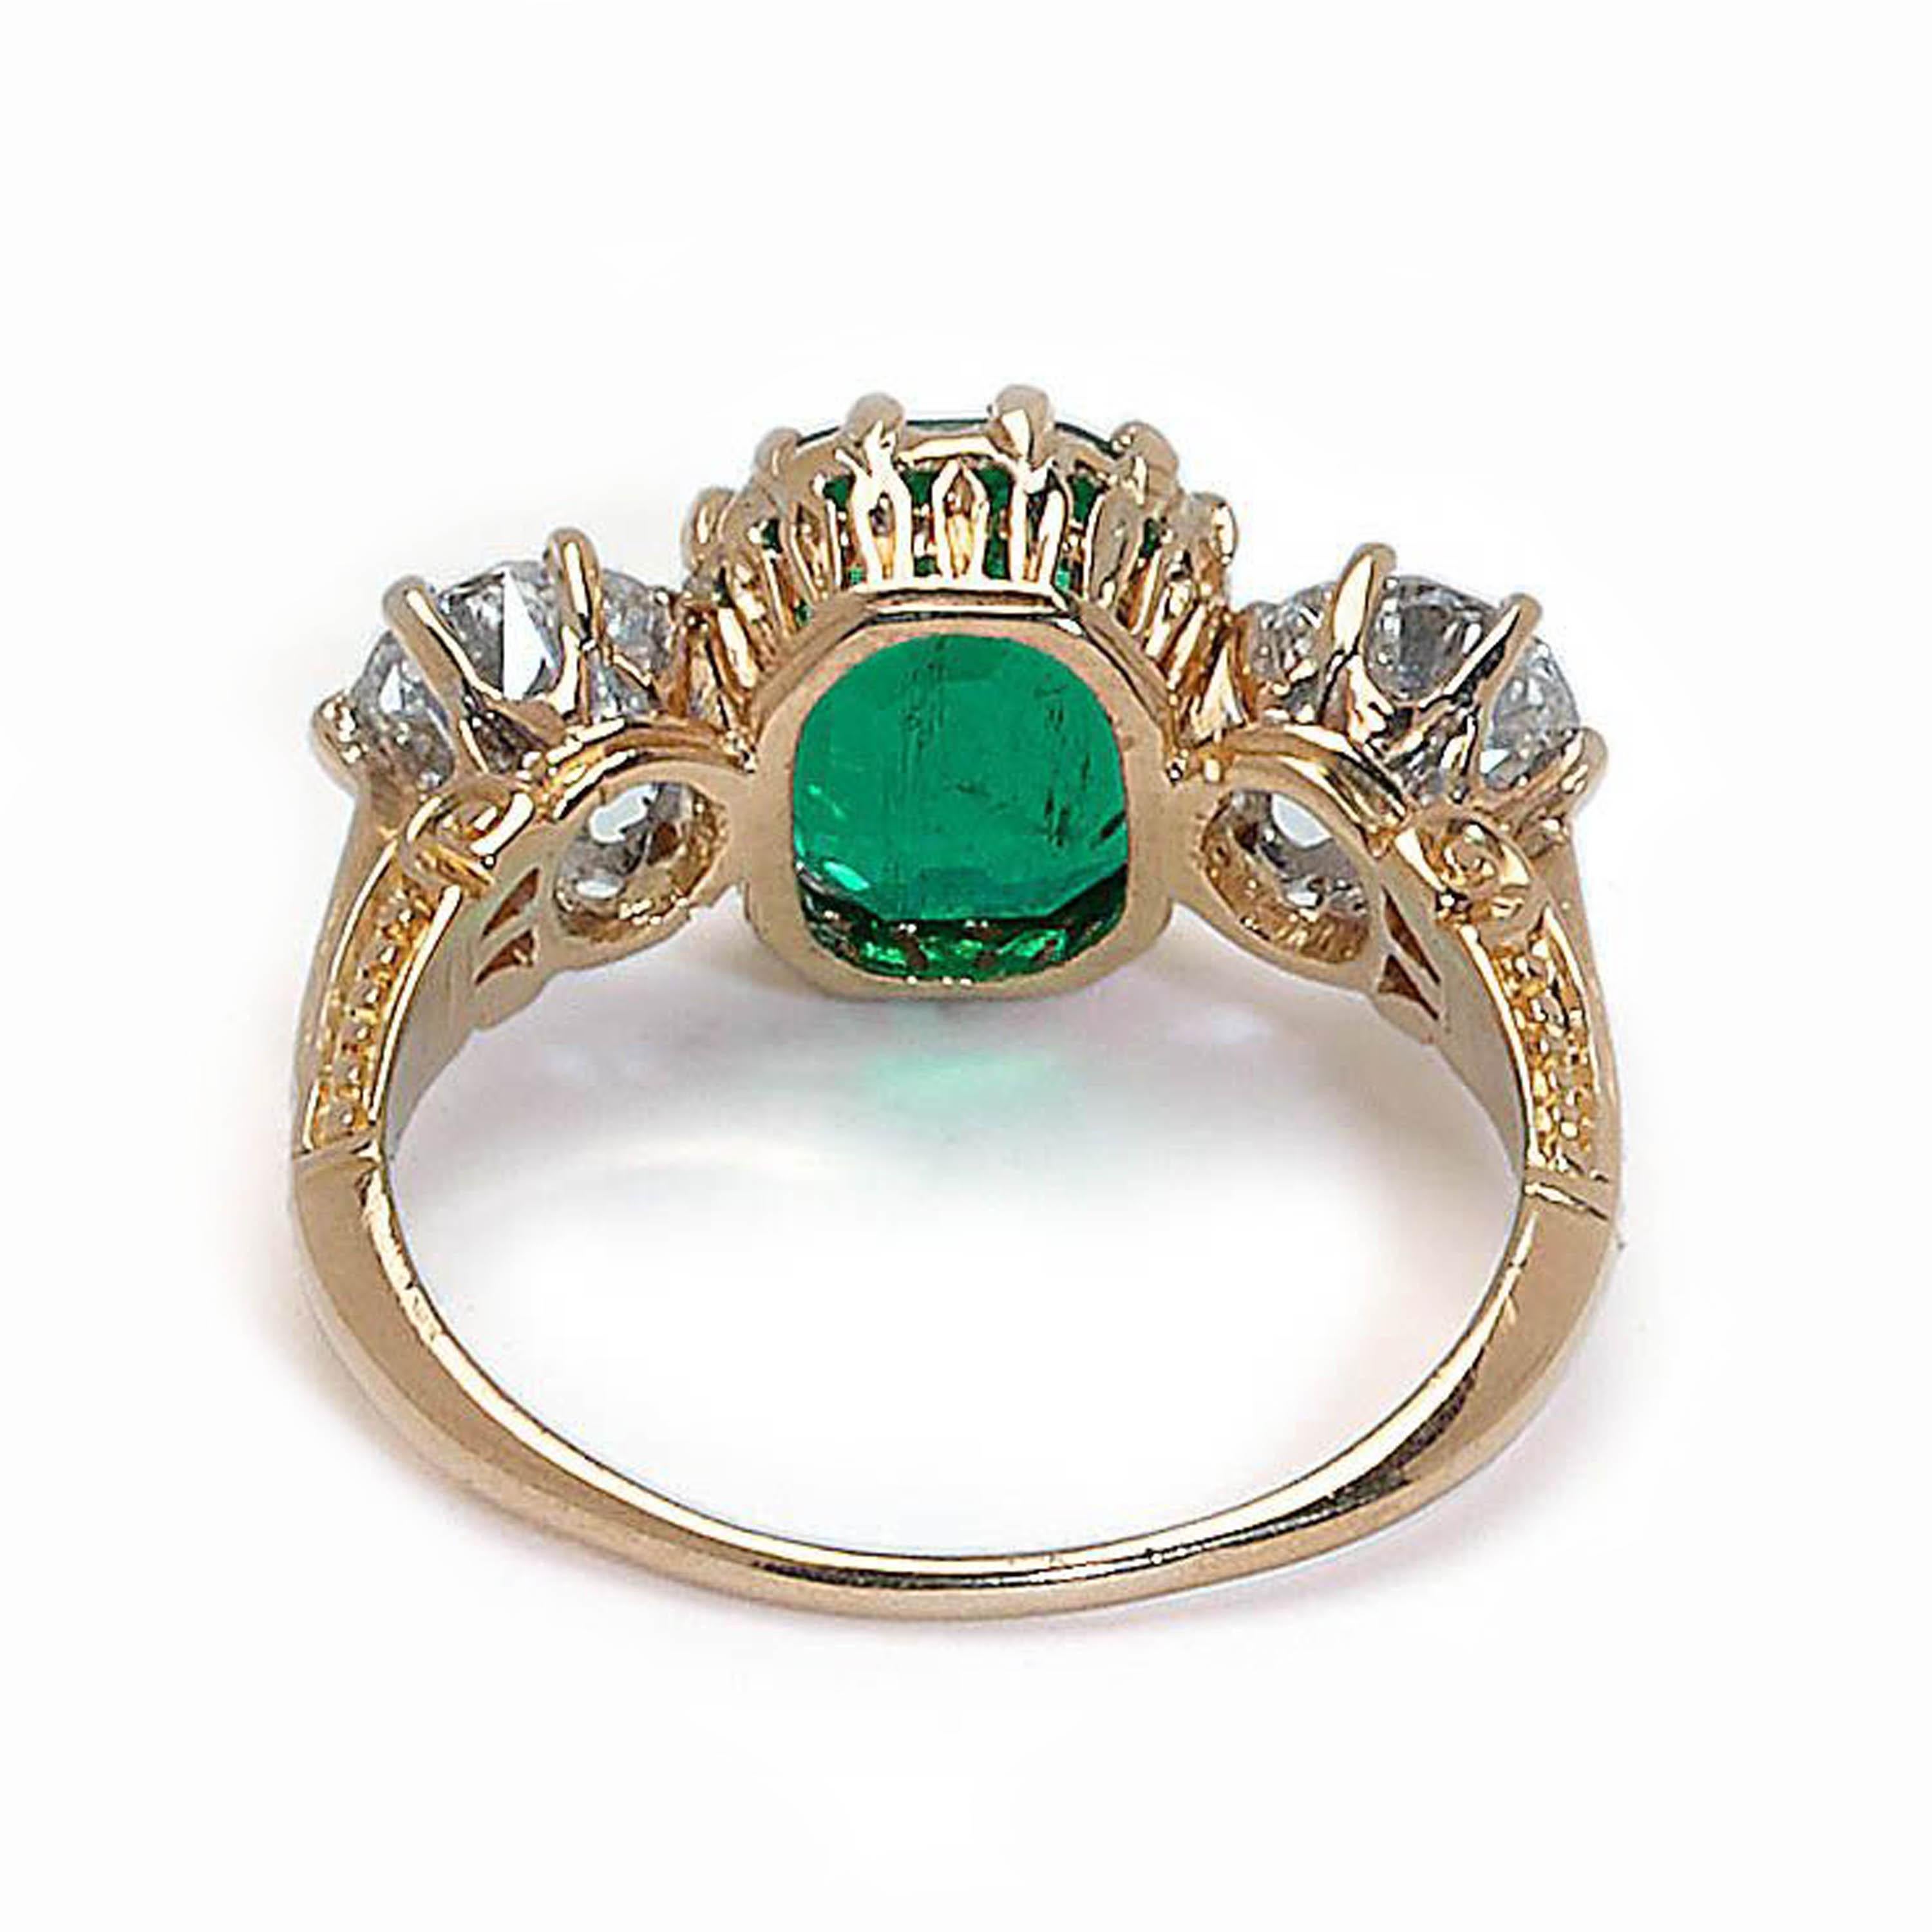 Edwardian Antique Emerald, Diamond and Gold Three Stone Ring, circa 1900